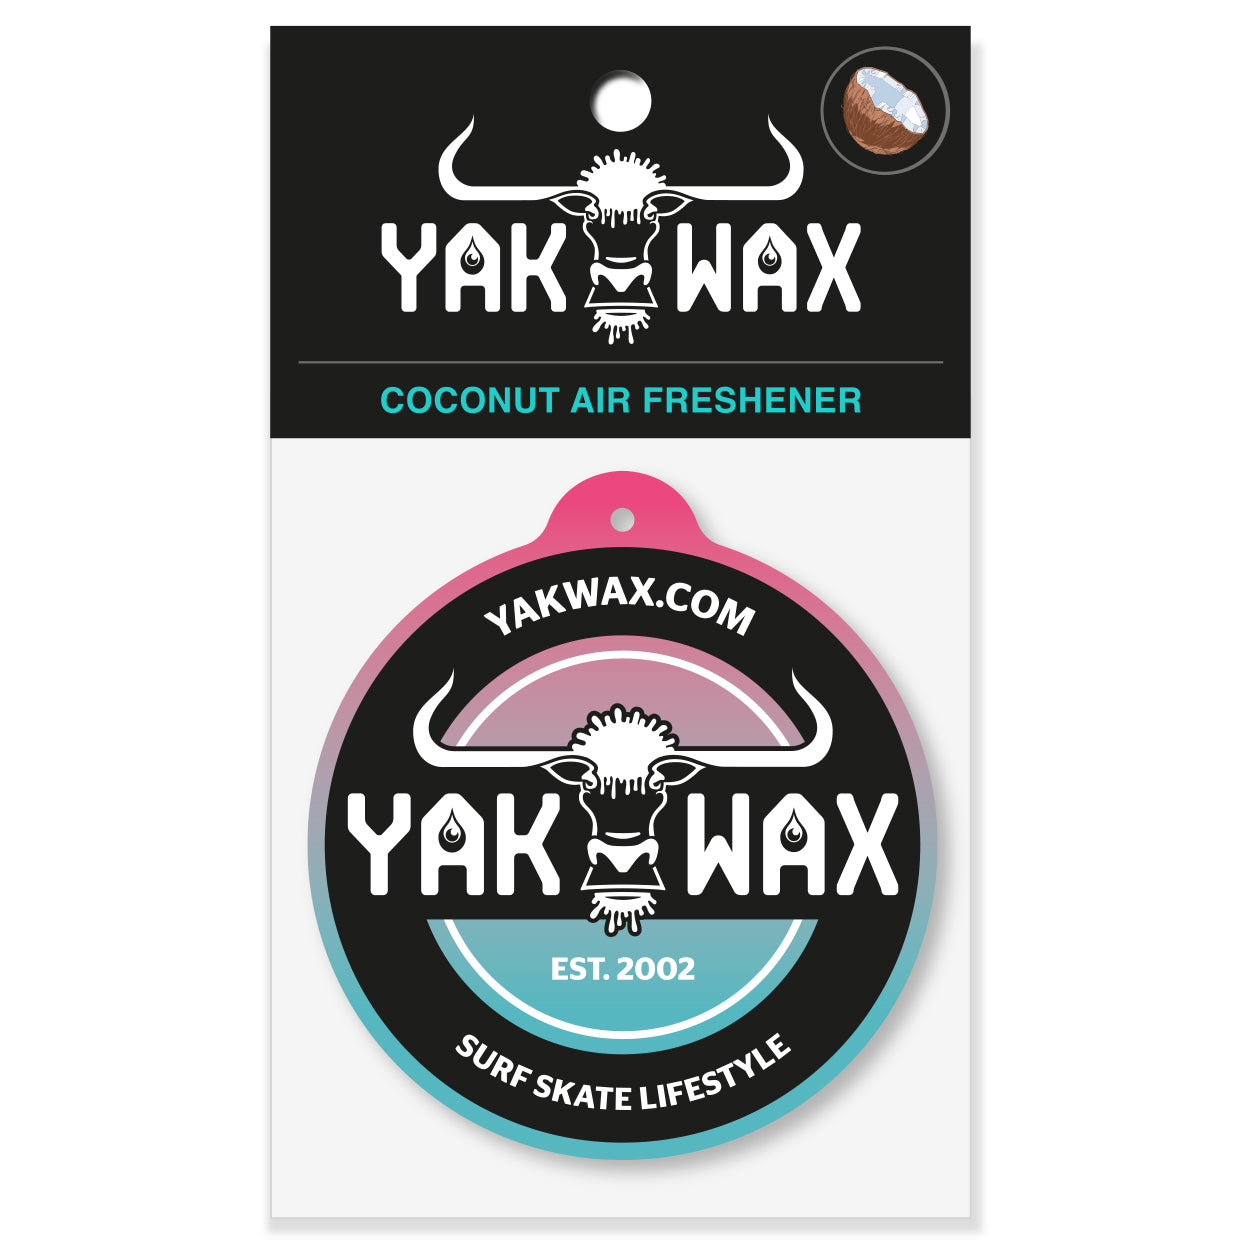 Yakwax Est. 2002 Air Freshener - Coconut Scent - Car Air Freshener by Yakwax